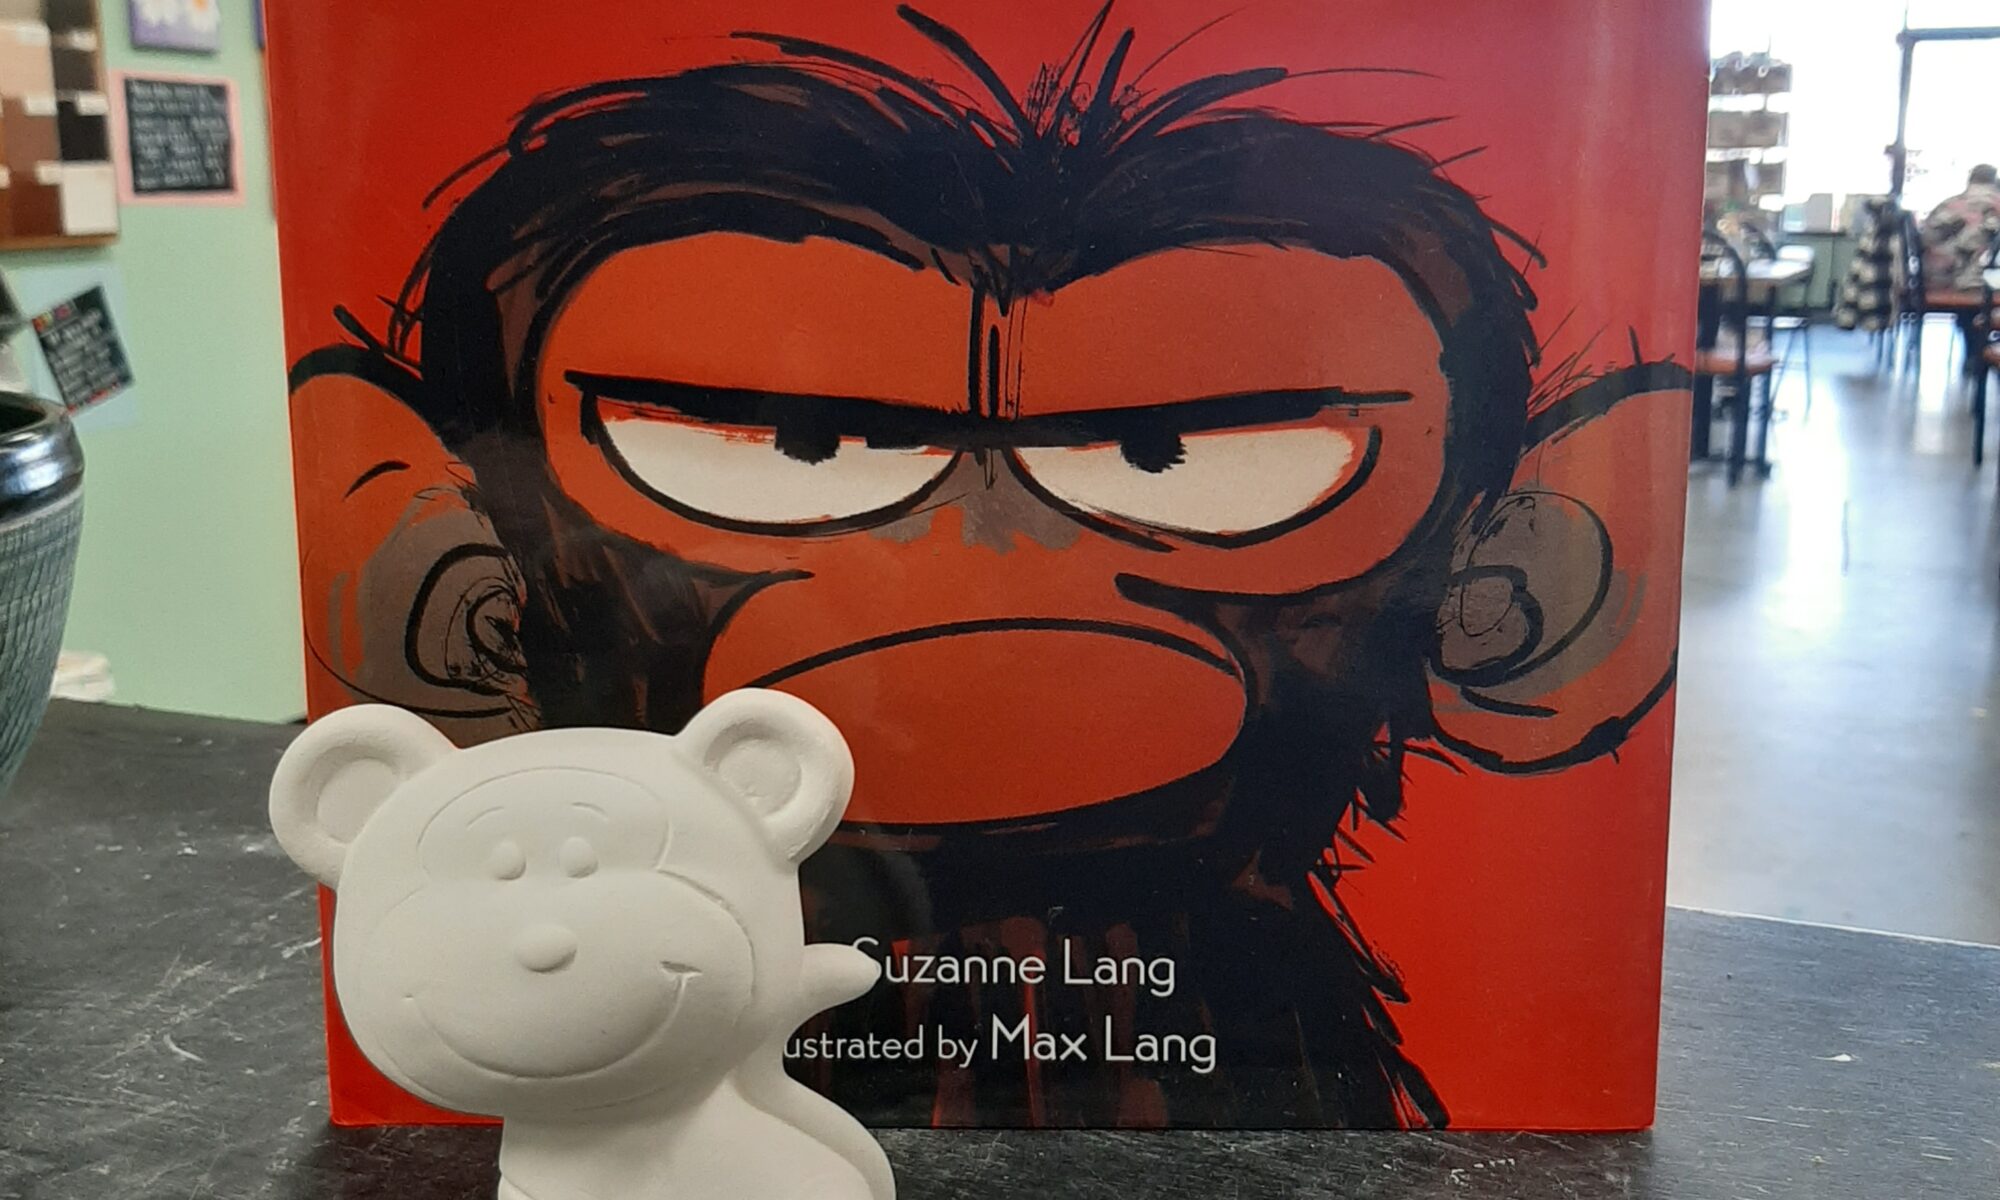 Story Time - Grumpy Monkey